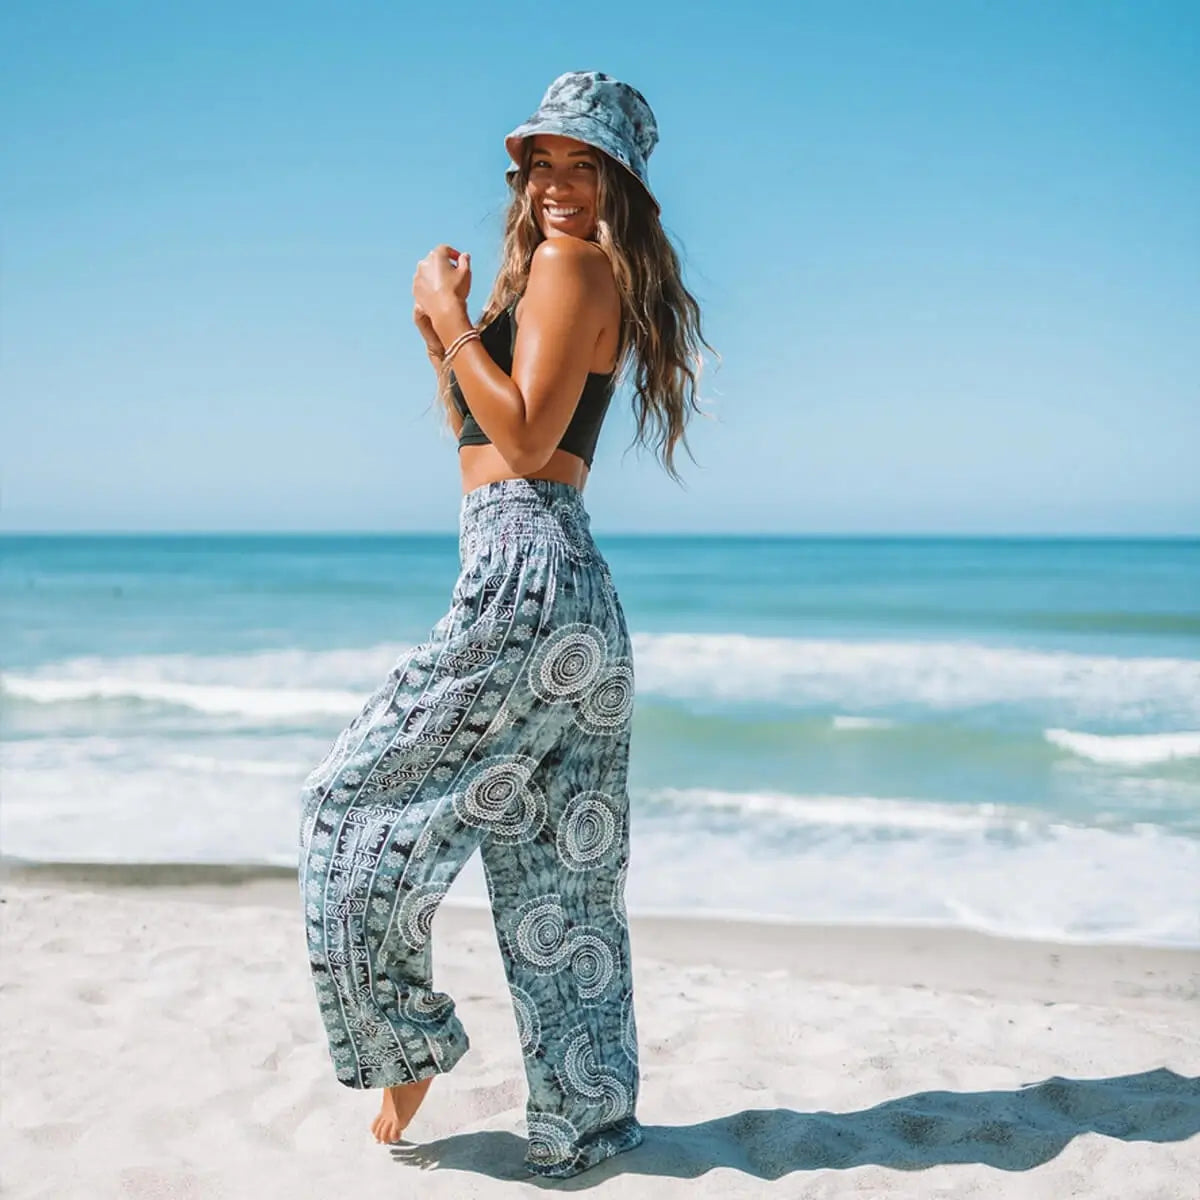 Buy Boho Pants Harem Pants Yoga Trousers for Woman Bohemian Beach Pants  (Large, Solid Black) at